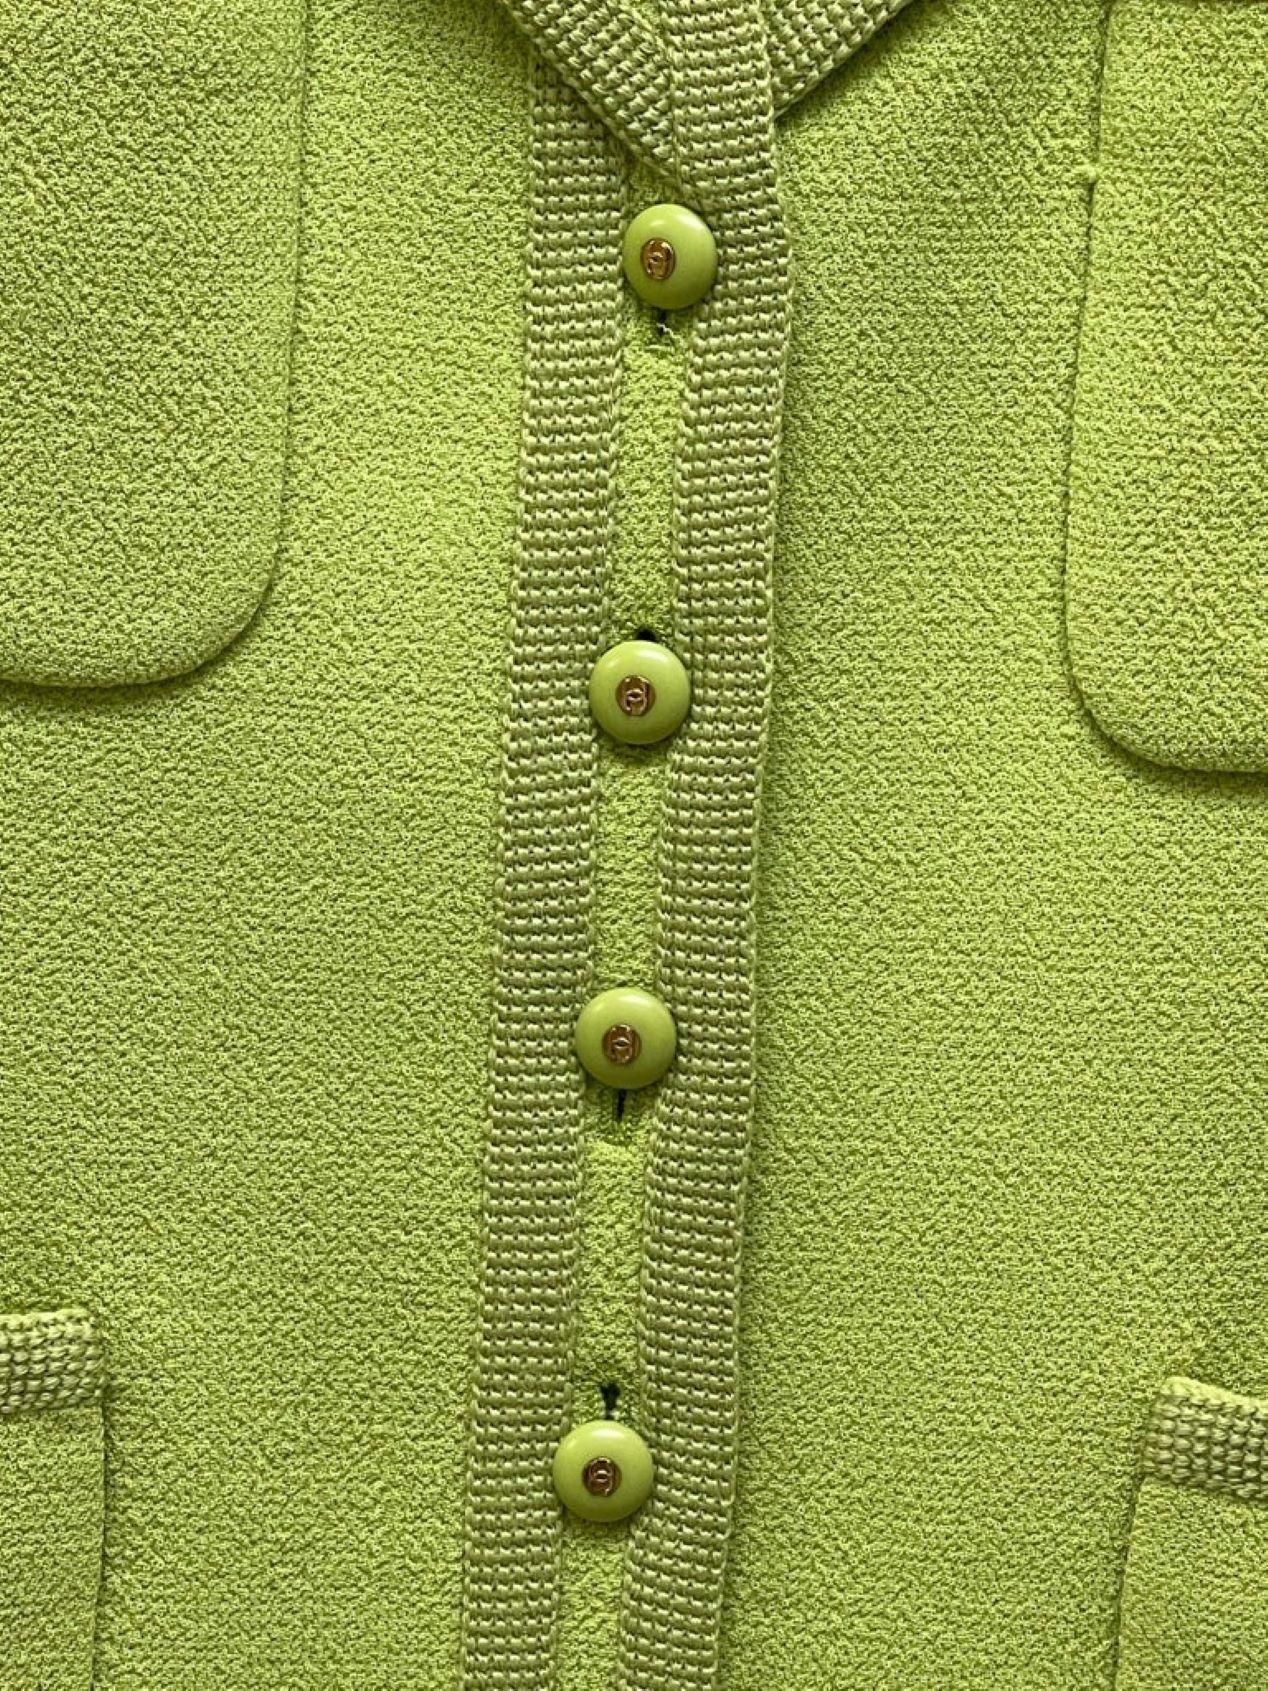 CHANEL BOUTIQUE Chartreuse Green Suit Signature Chanel 2